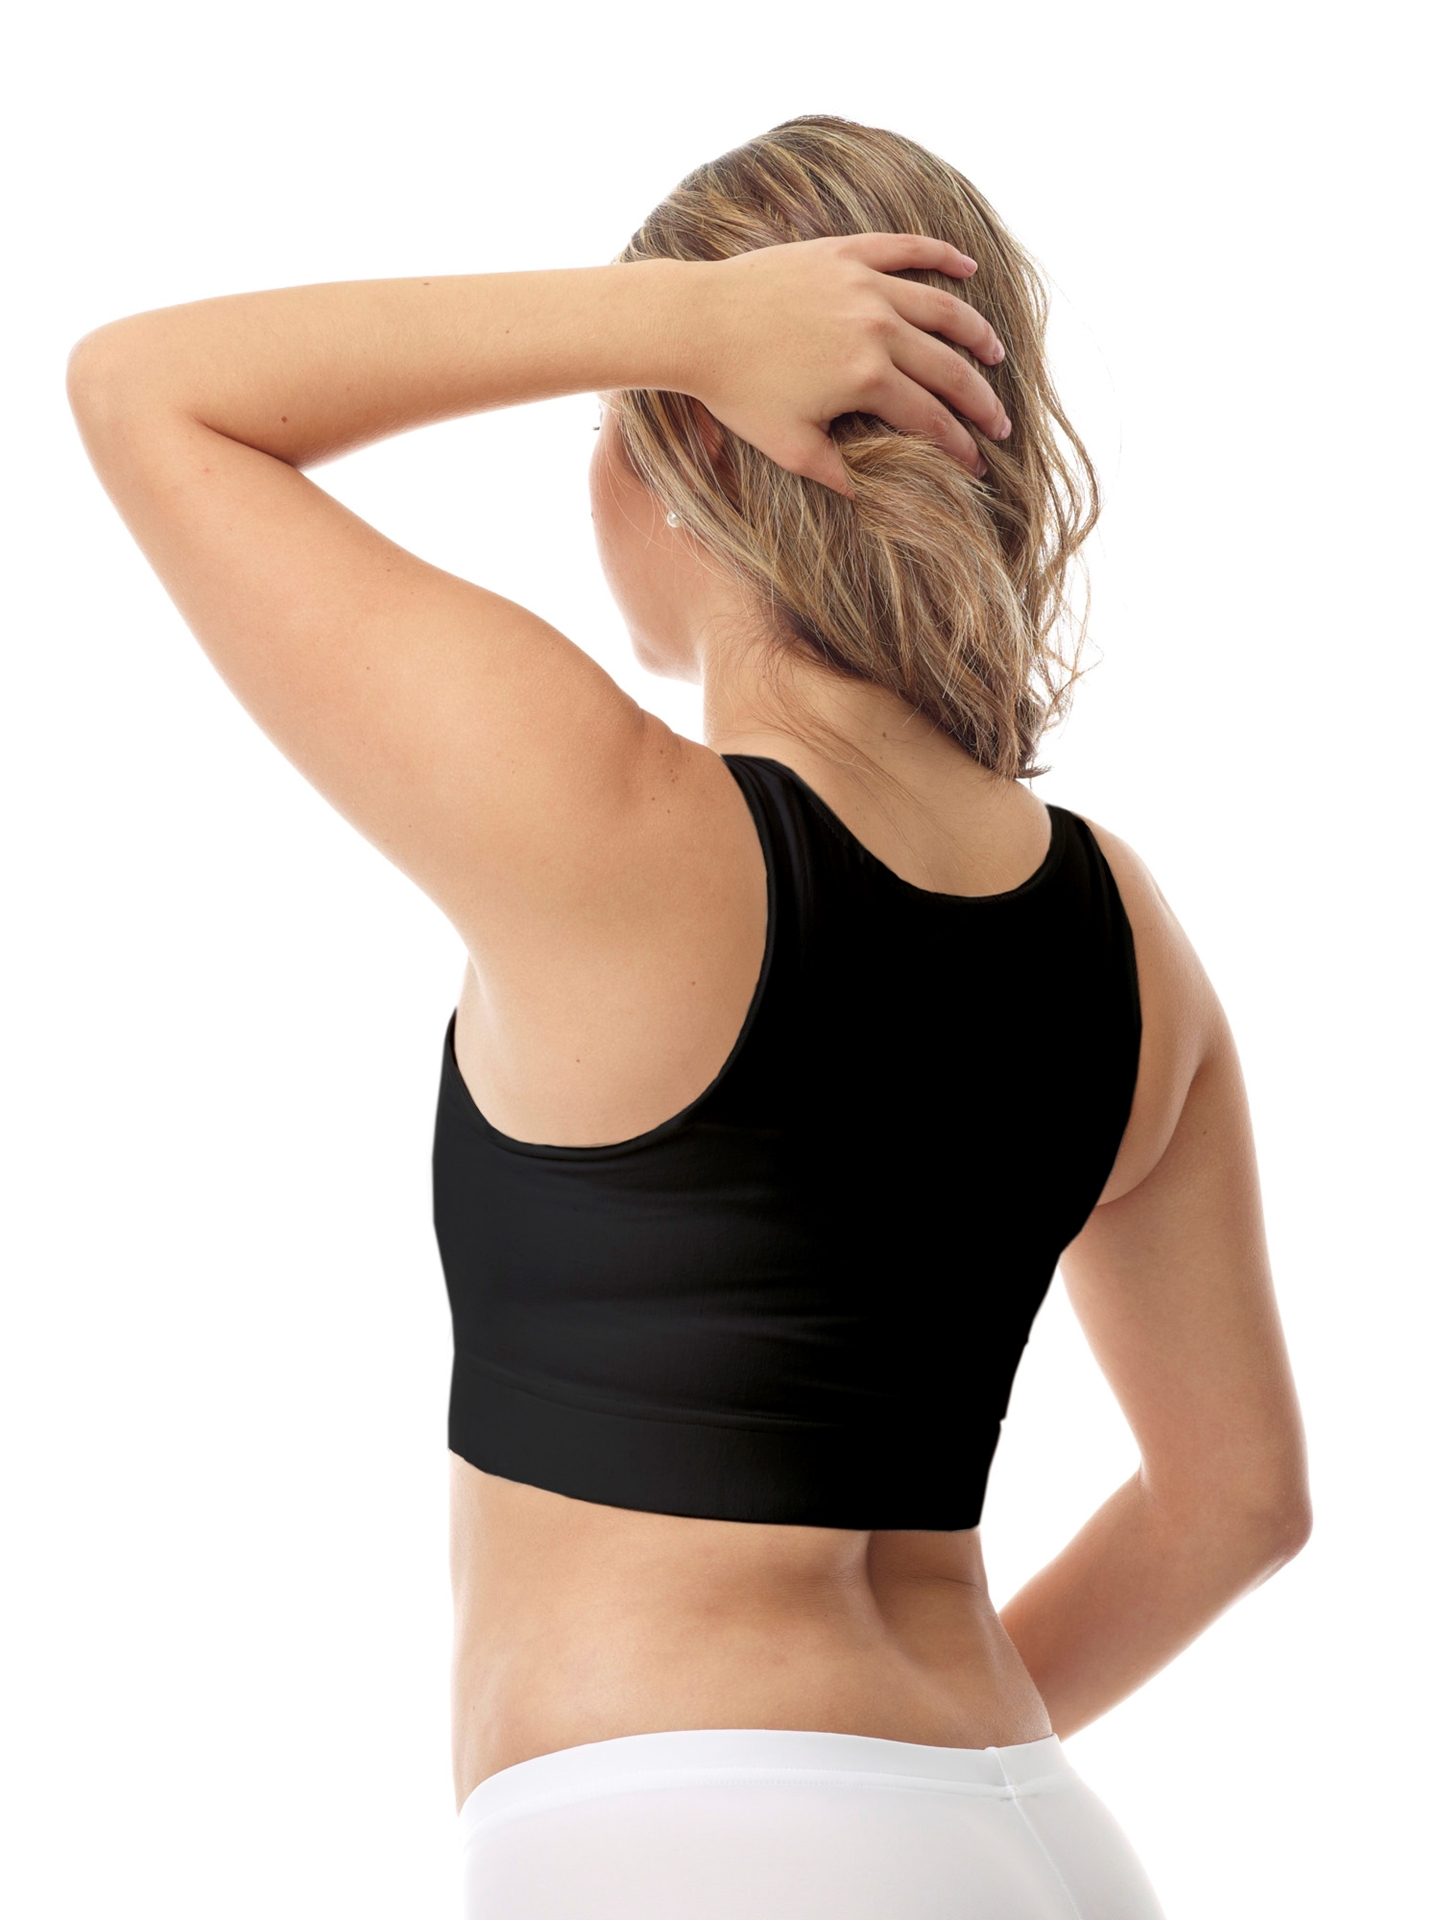 Sports bra/regular bras that smooth back fat under clothes? :  r/bigboobproblems